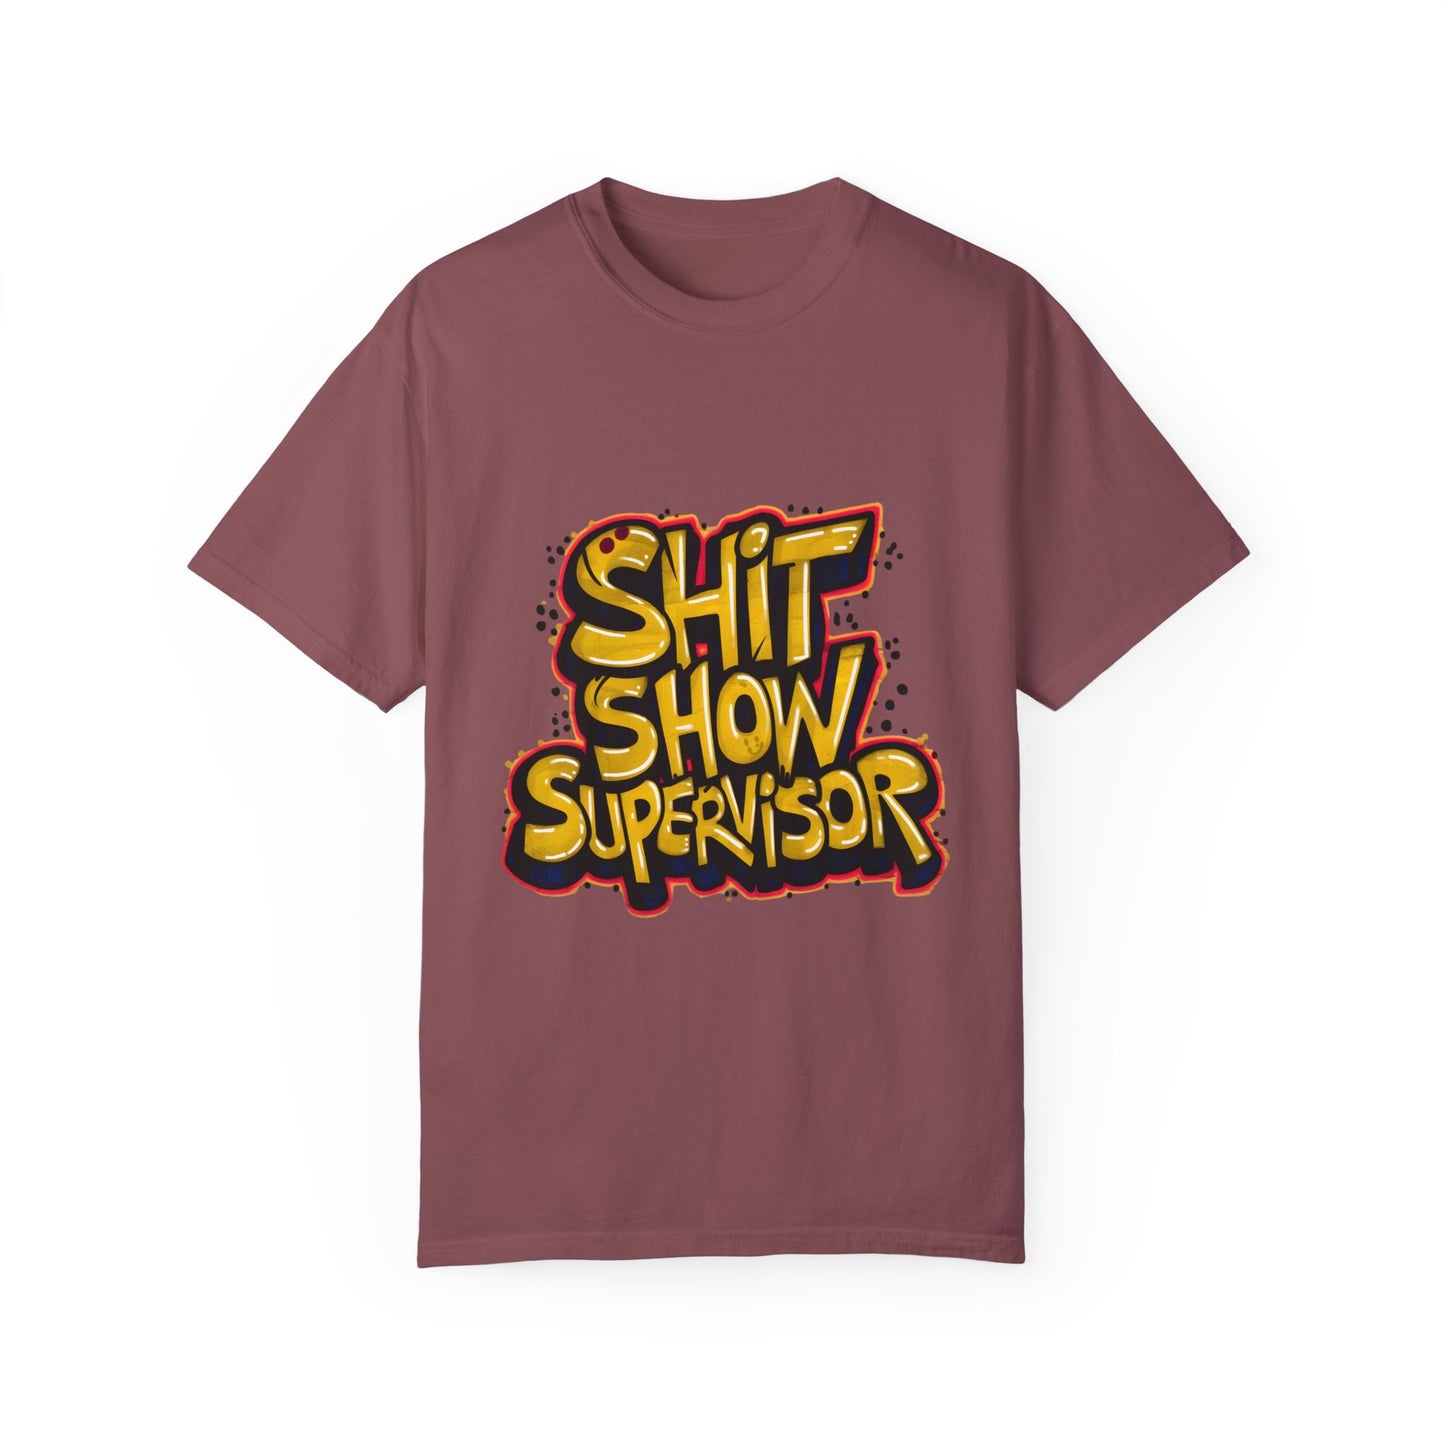 Shit Show Supervisor Urban Sarcastic Graphic Unisex Garment Dyed T-shirt Cotton Funny Humorous Graphic Soft Premium Unisex Men Women Brick T-shirt Birthday Gift-5